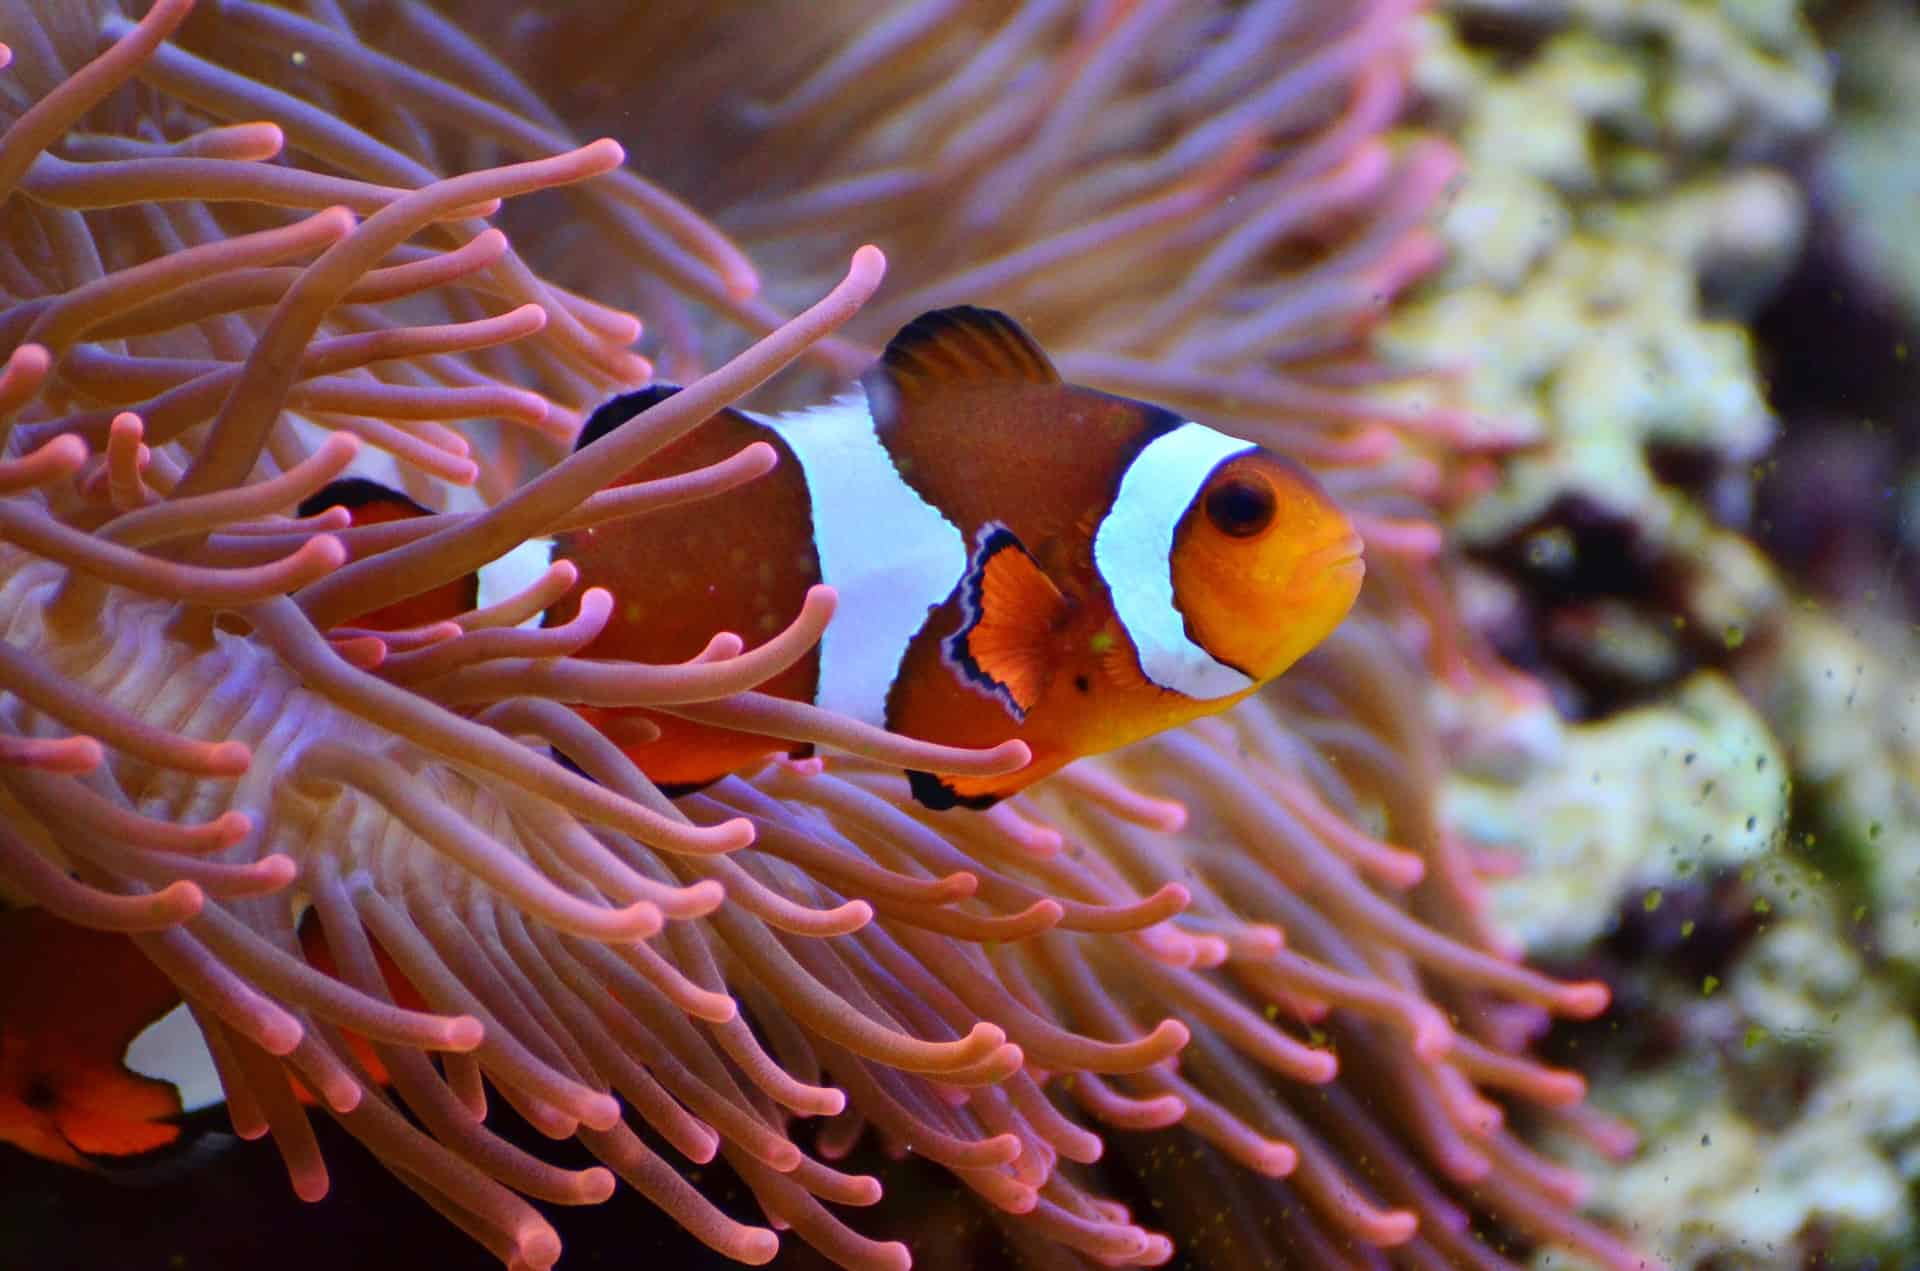 Top 17 Clown Fish Facts - Diet, Habitat, Types & More | Facts.net